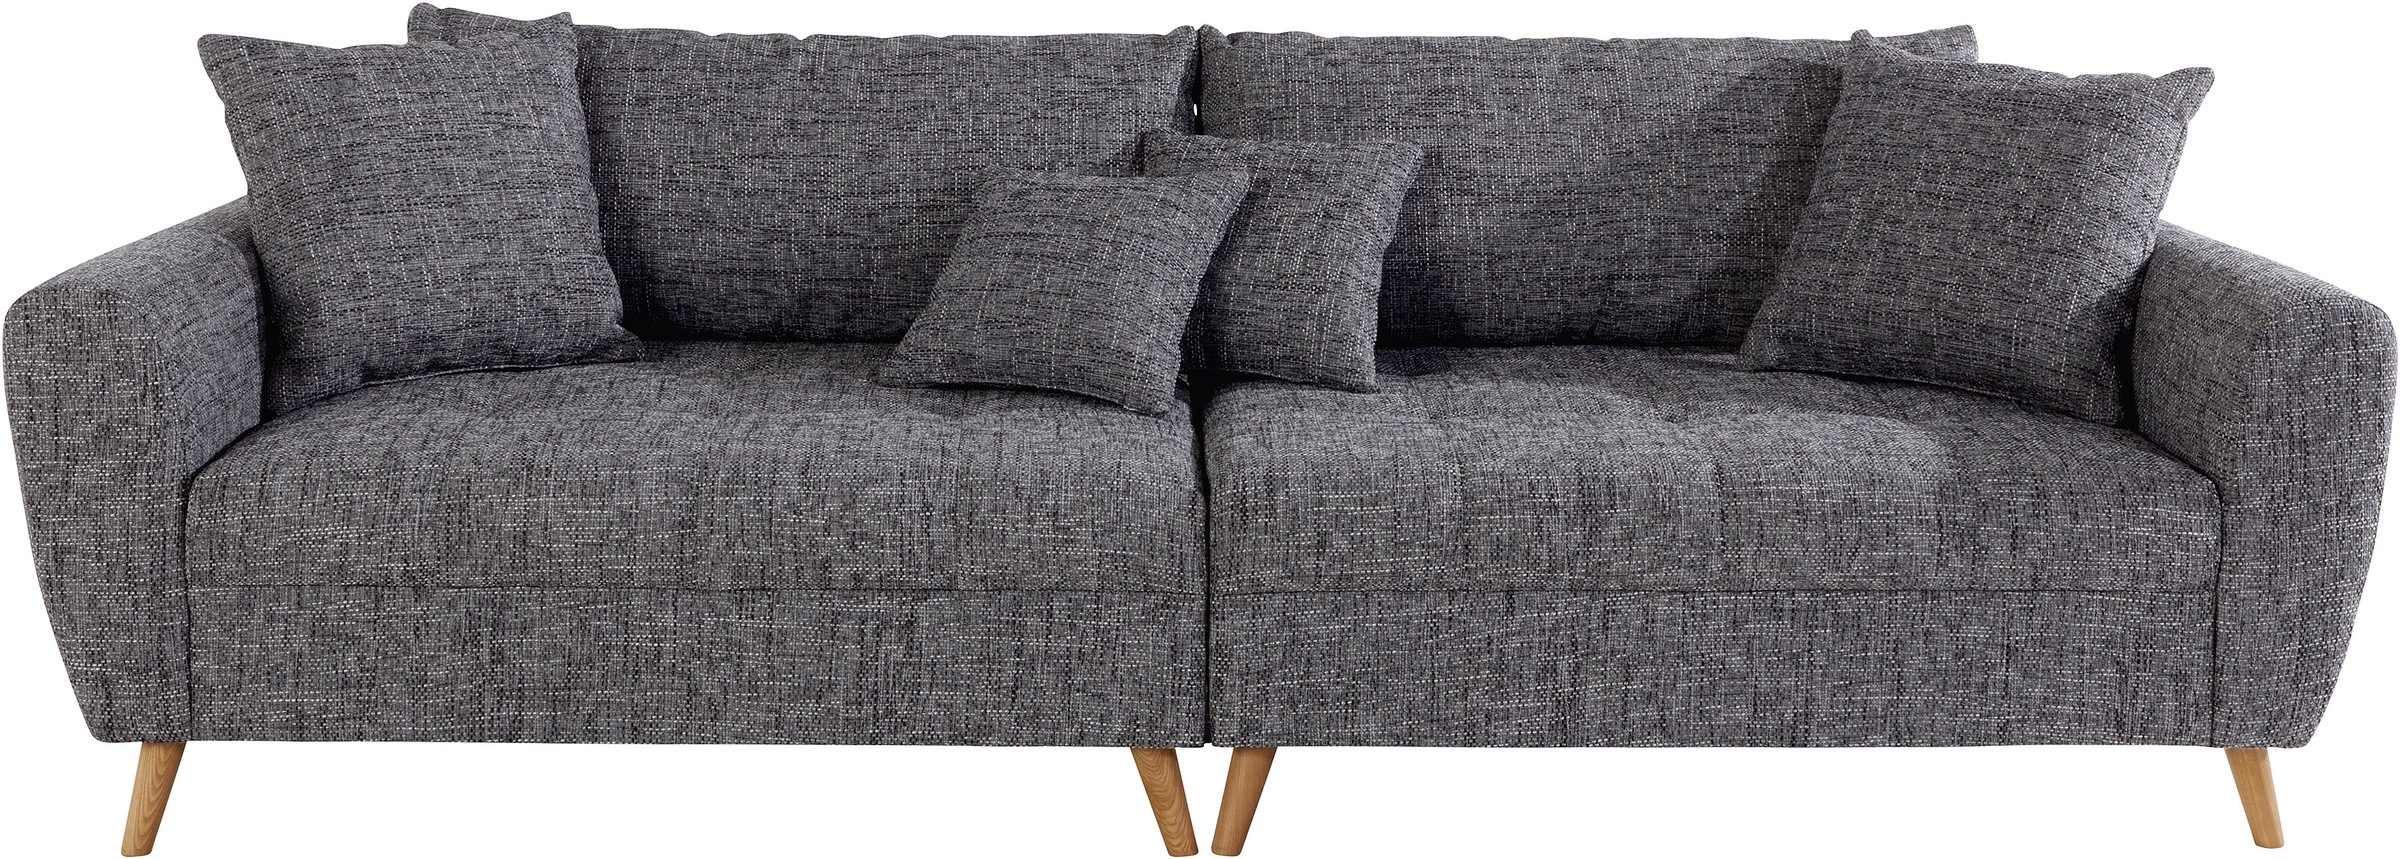 Home affaire Didelė sofa »Penelope Luxus« su besond...